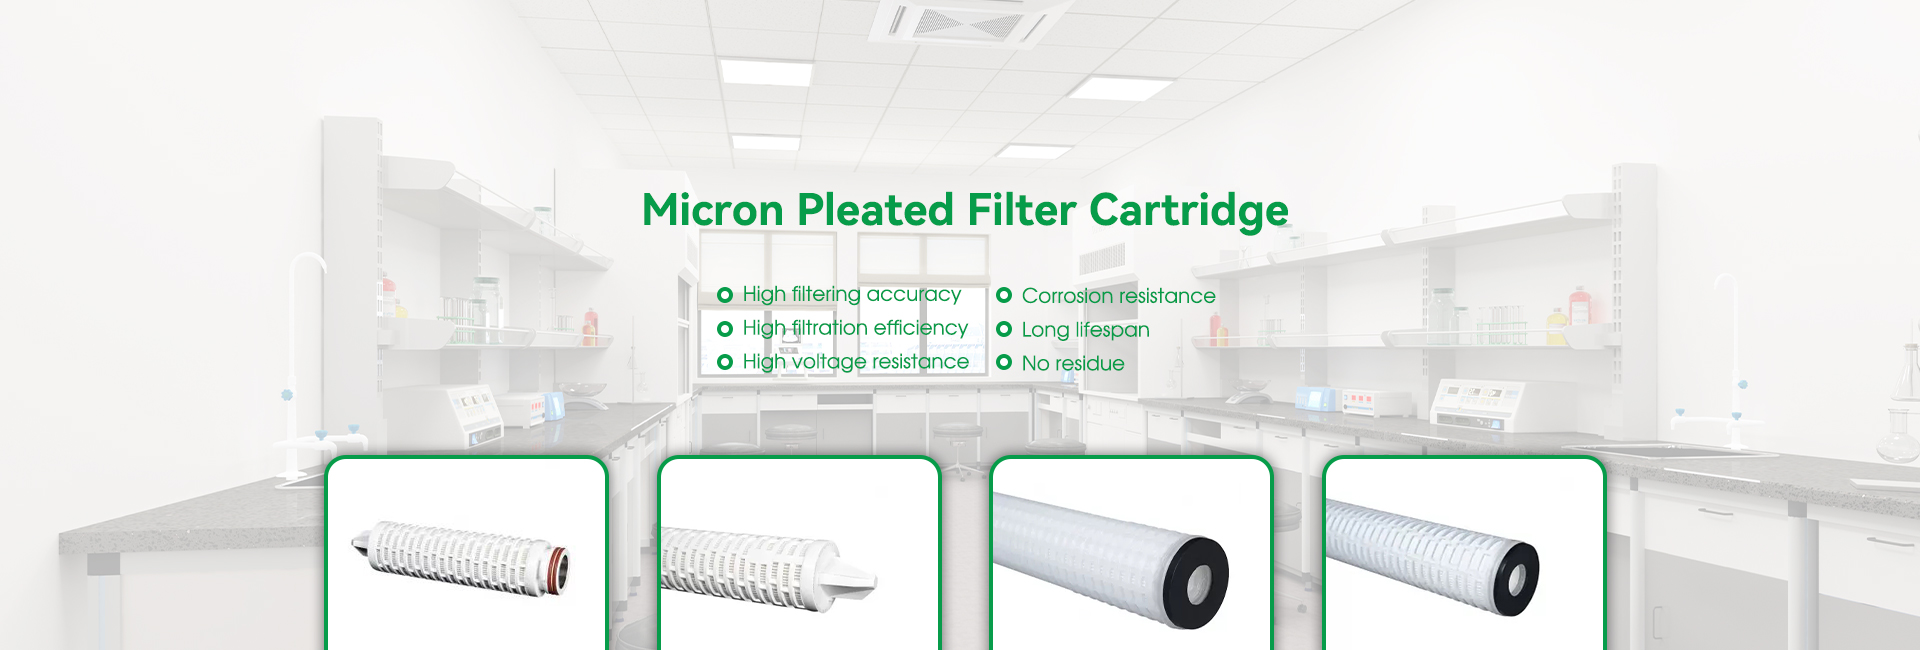 Micron veckad filterpatronfabrik